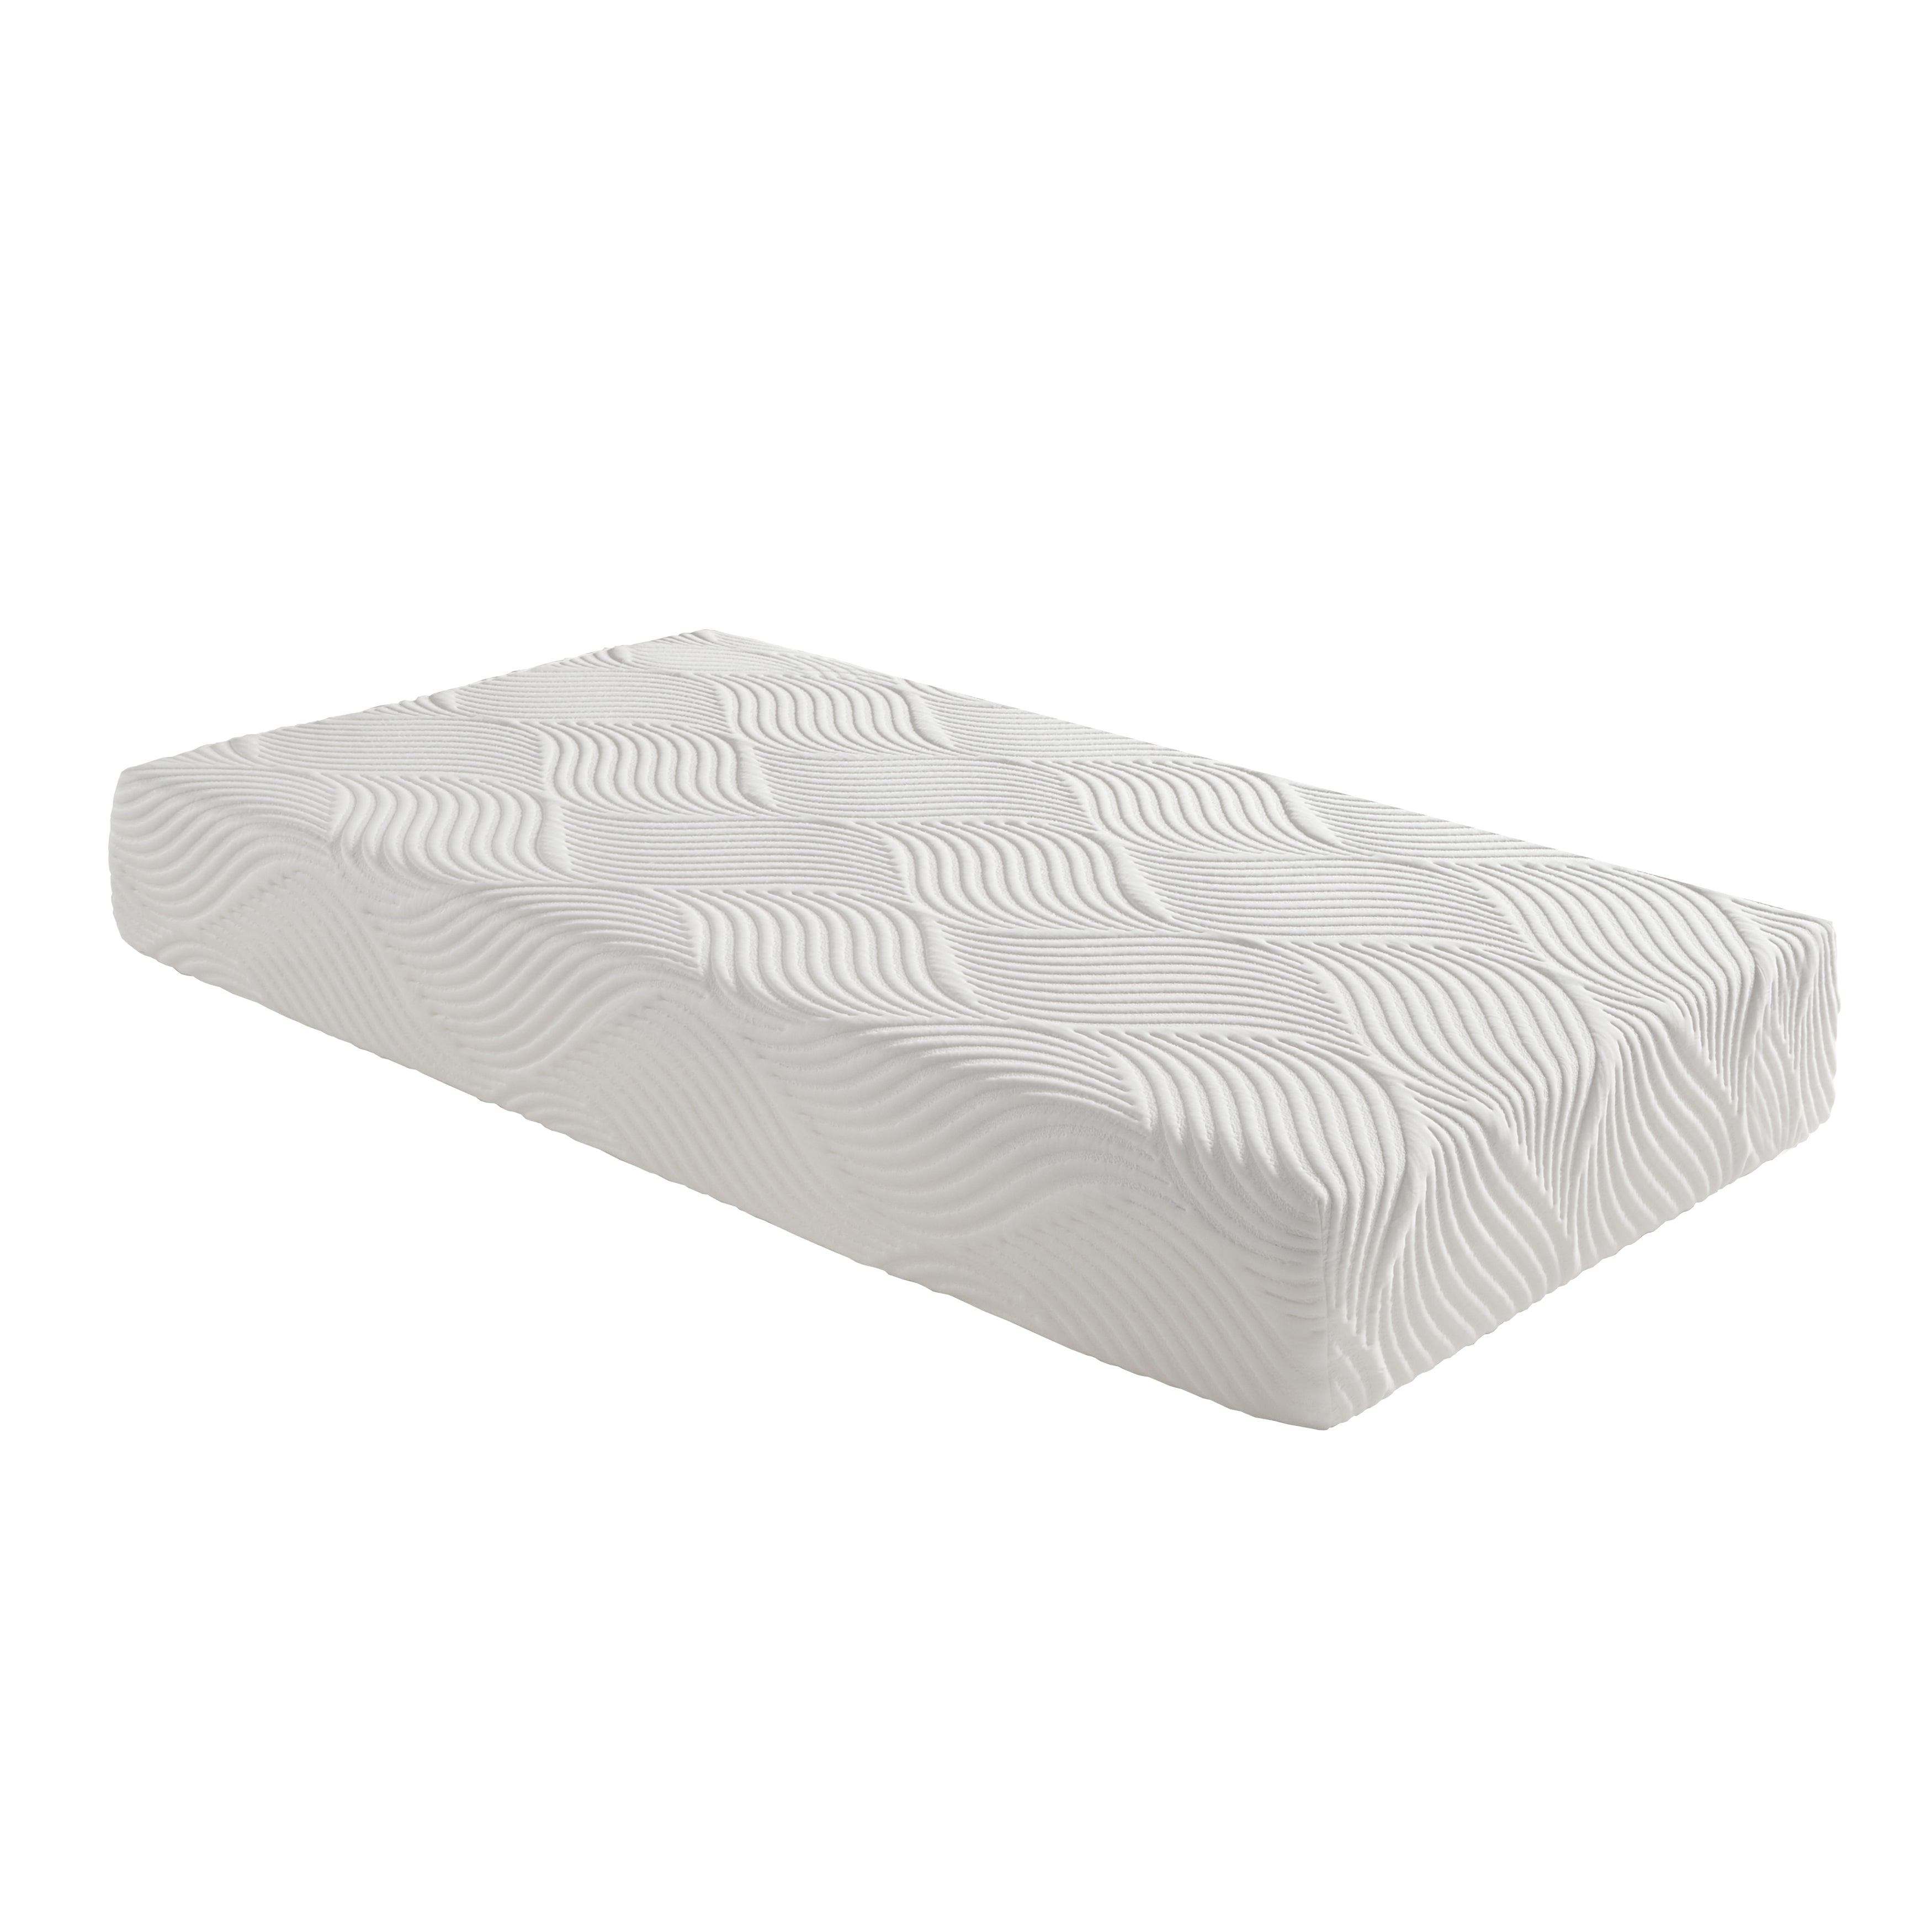 72 L x 33W x 2 Inch Foam Twin Bed Pad Mattress Eggcrate Overlay Topper Joerns 